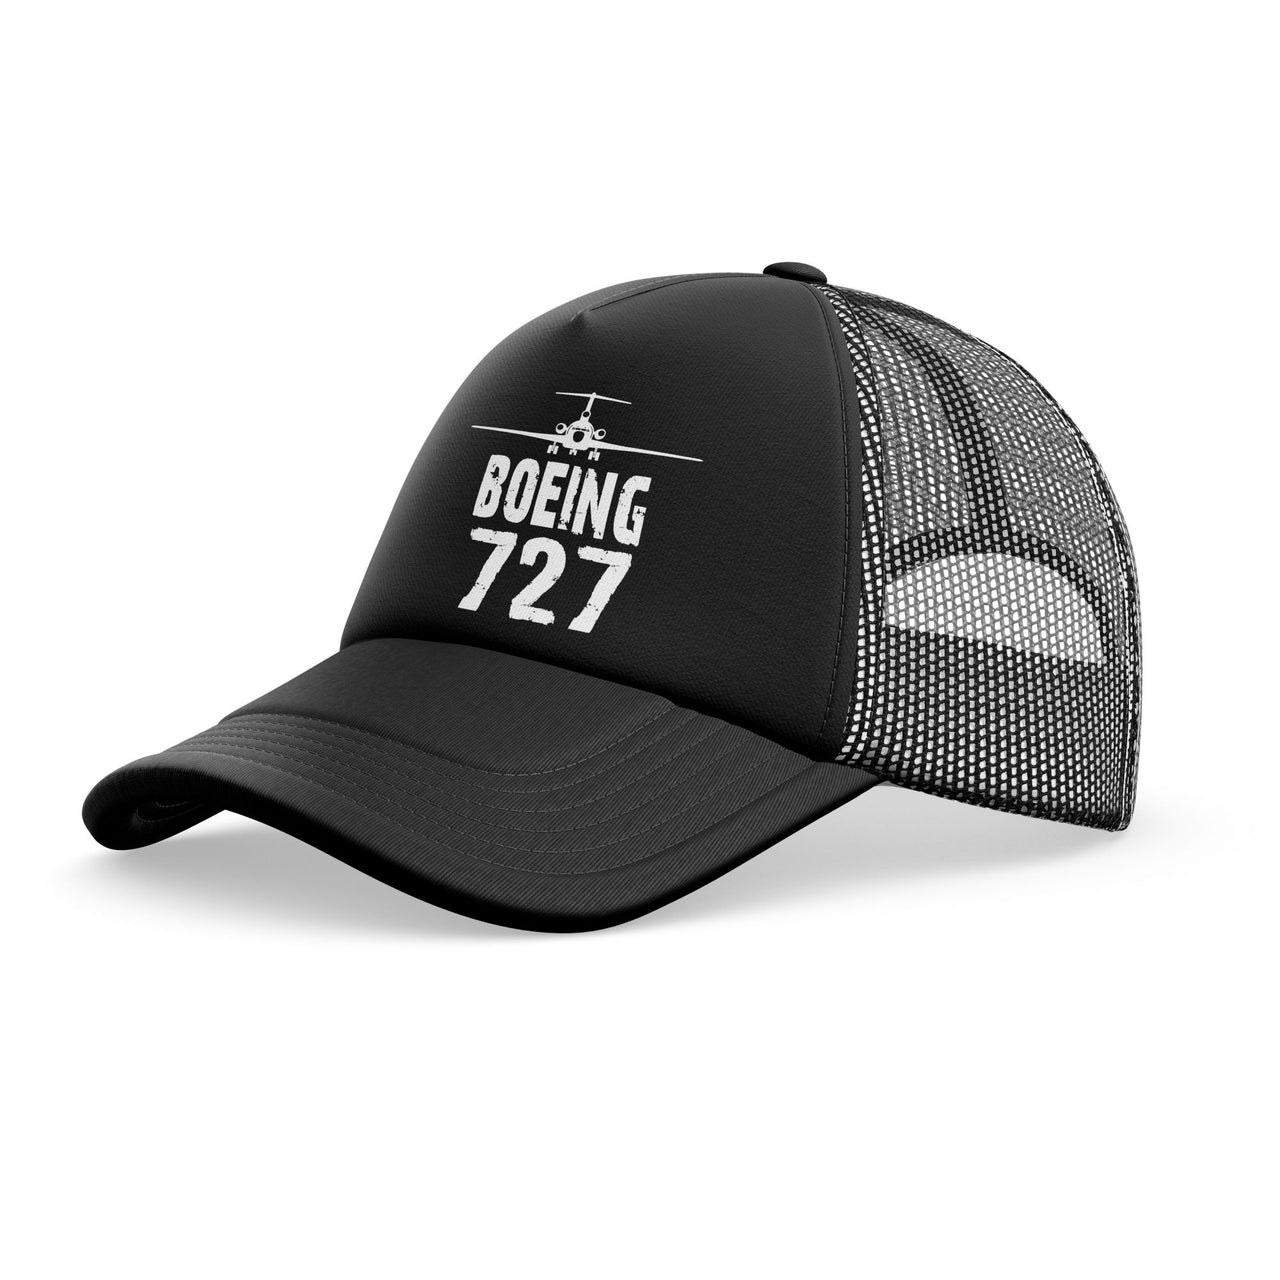 Boeing 727 & Plane Designed Trucker Caps & Hats